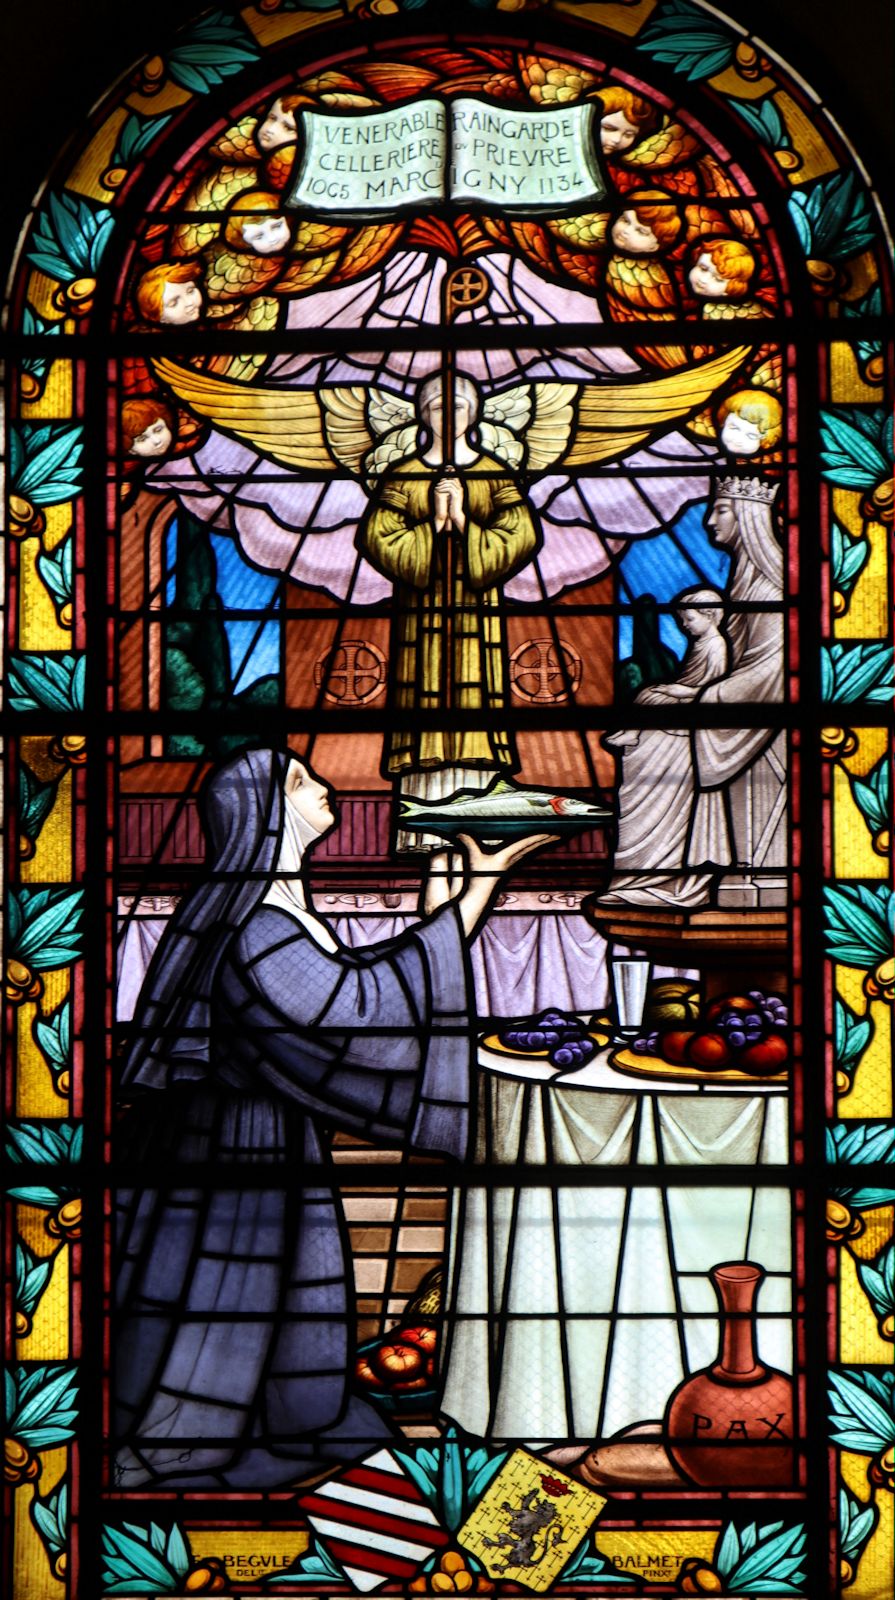 Joseph-Émile Bégule und Louis Balmet: Raingardis, Glasfenster, in der Kirche Saint-Nicolas des ehemaligen Priorats Sainte-Trinité in Marcigny